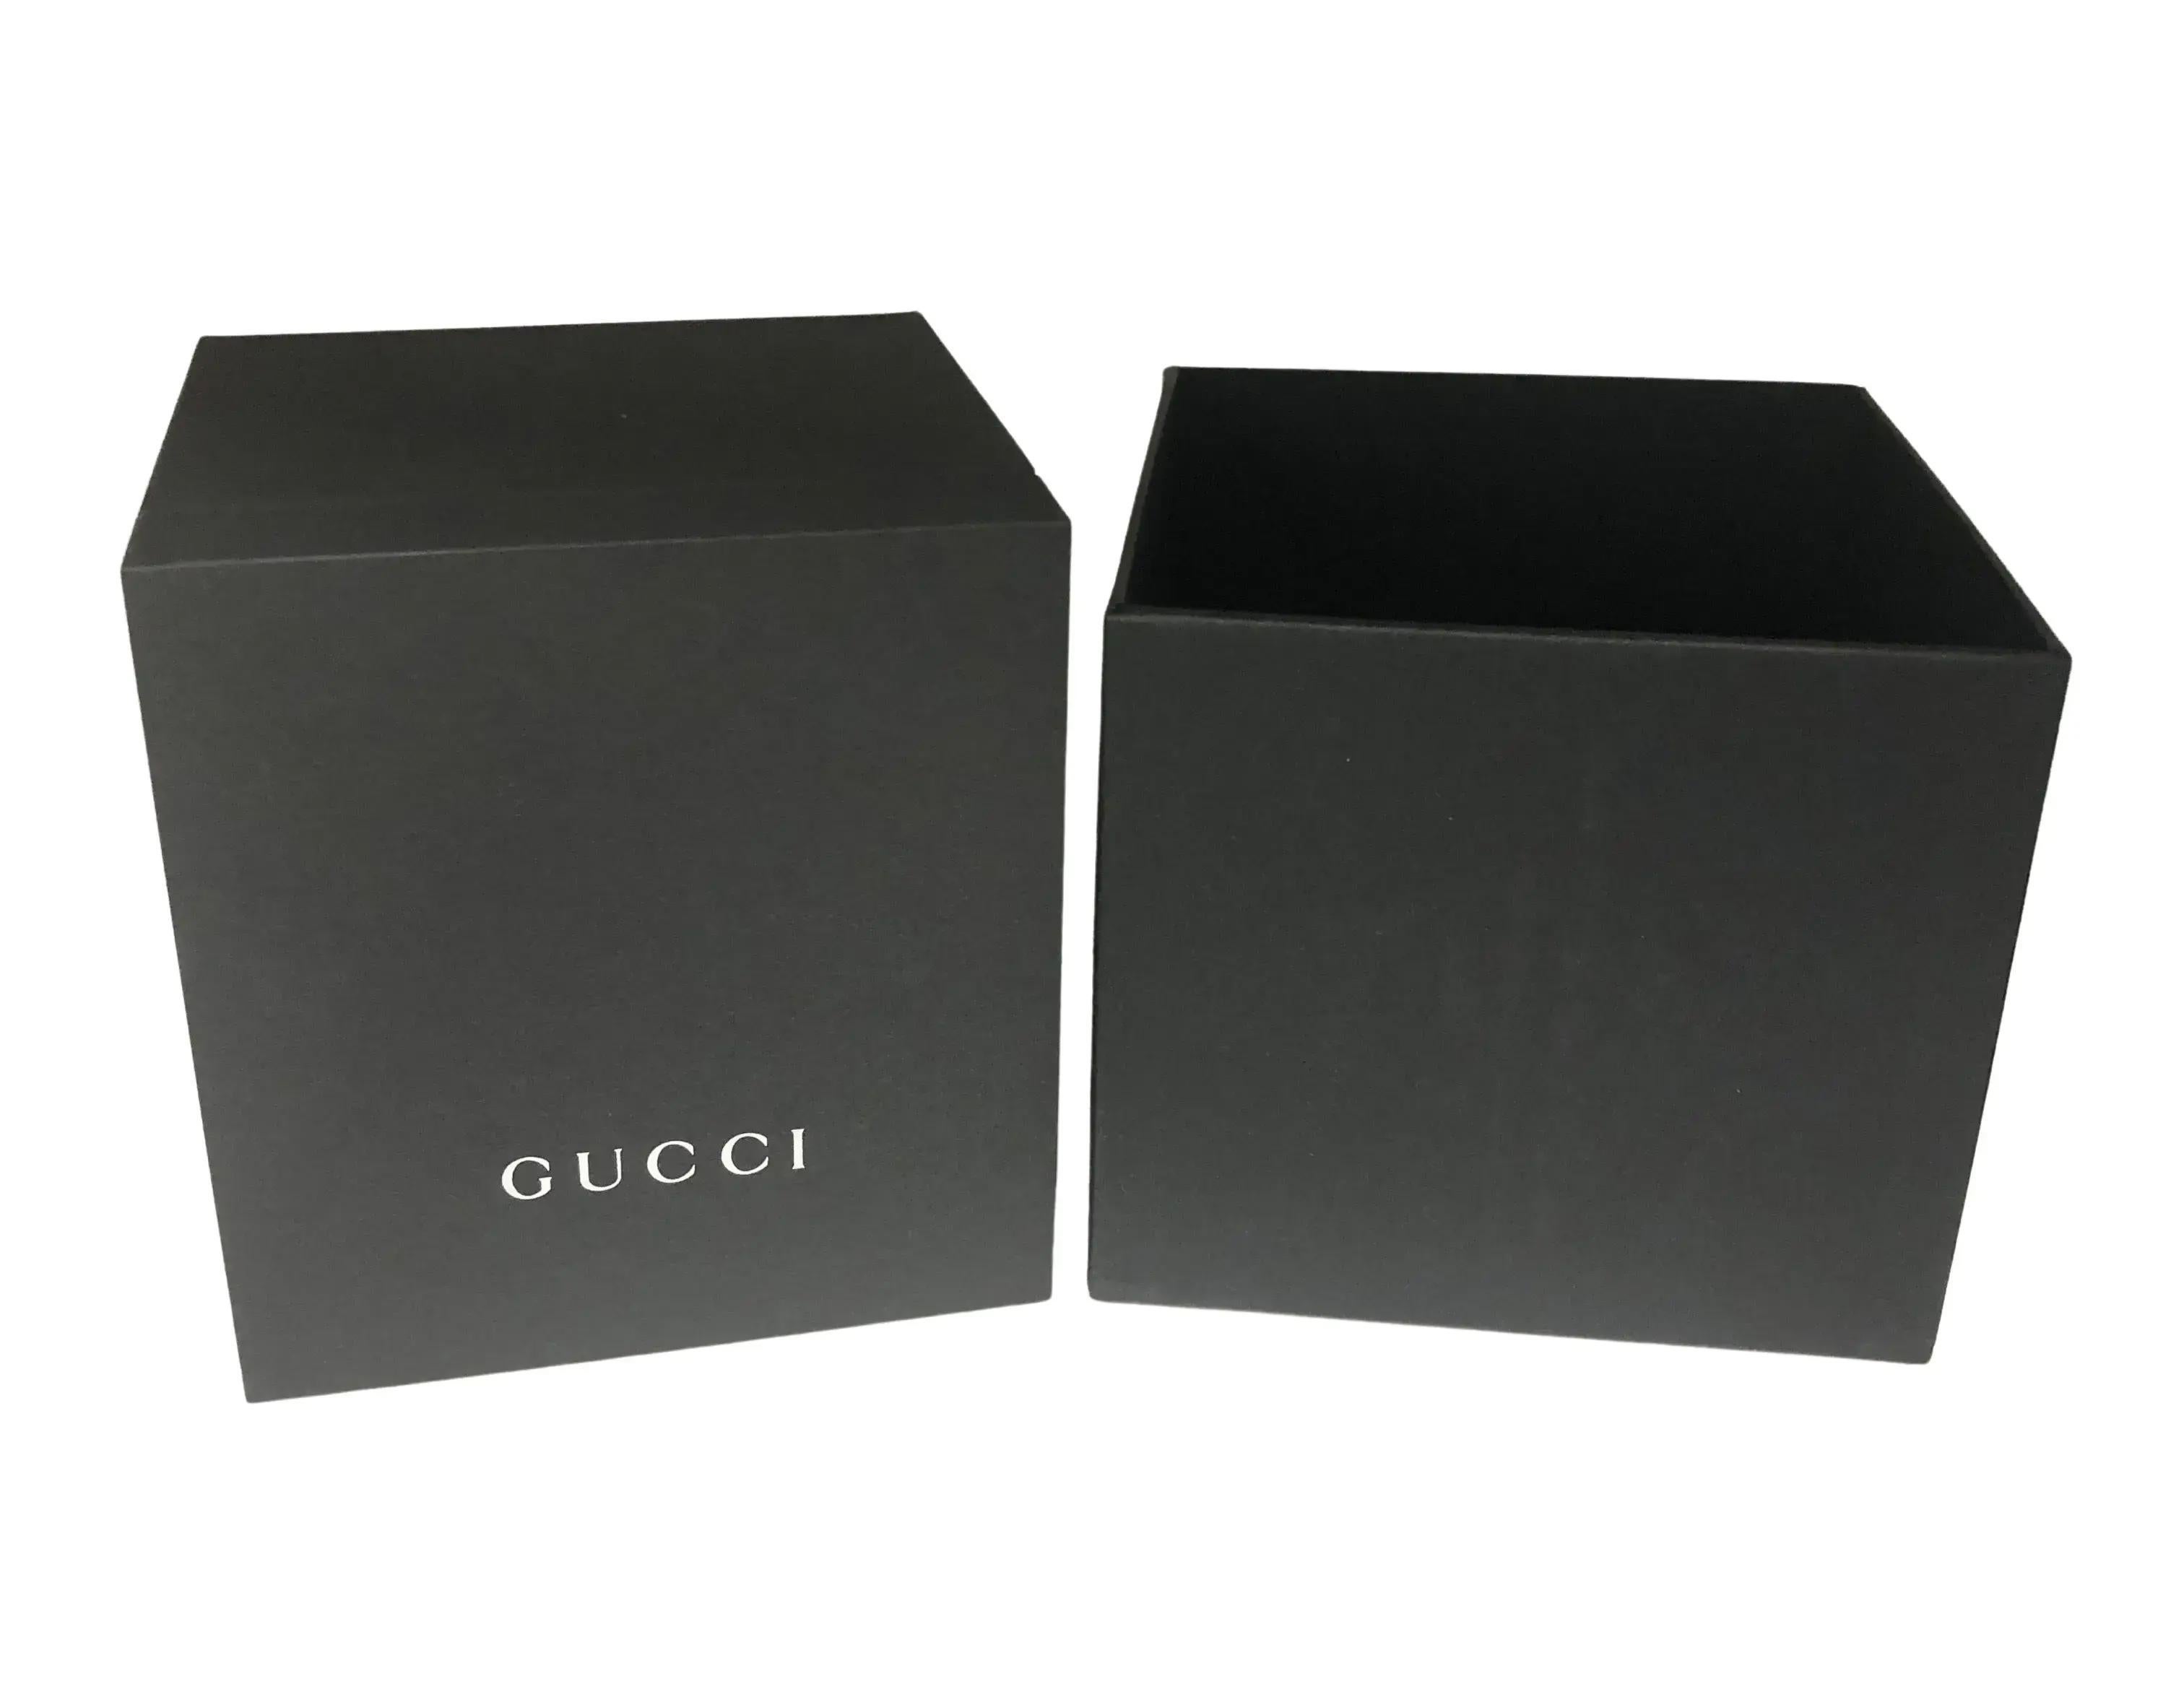 Montre Femme Gucci Diamantissima 32mm Acier inoxydable Cadran noir Quartz YA141403 en vente 2